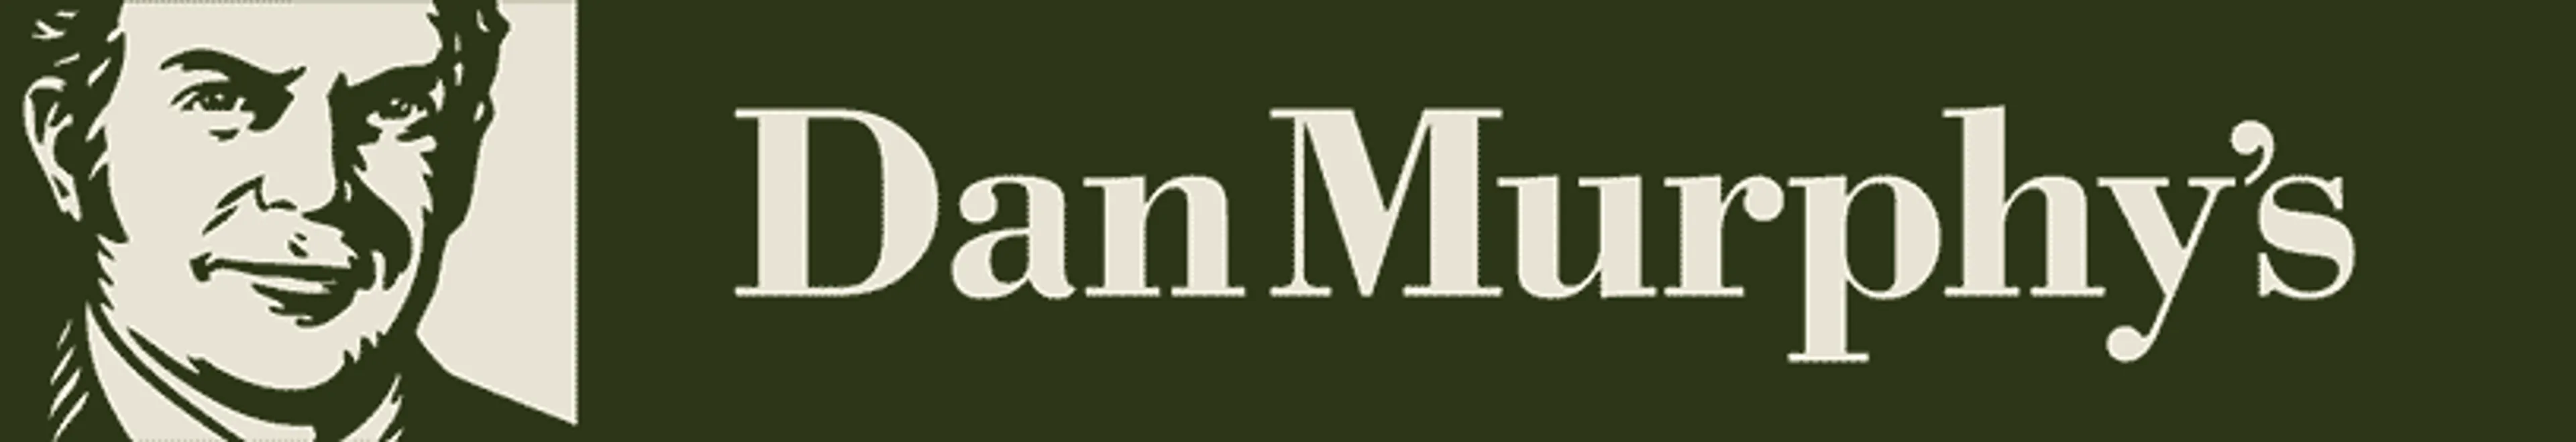 DAN MURPHY'S logo